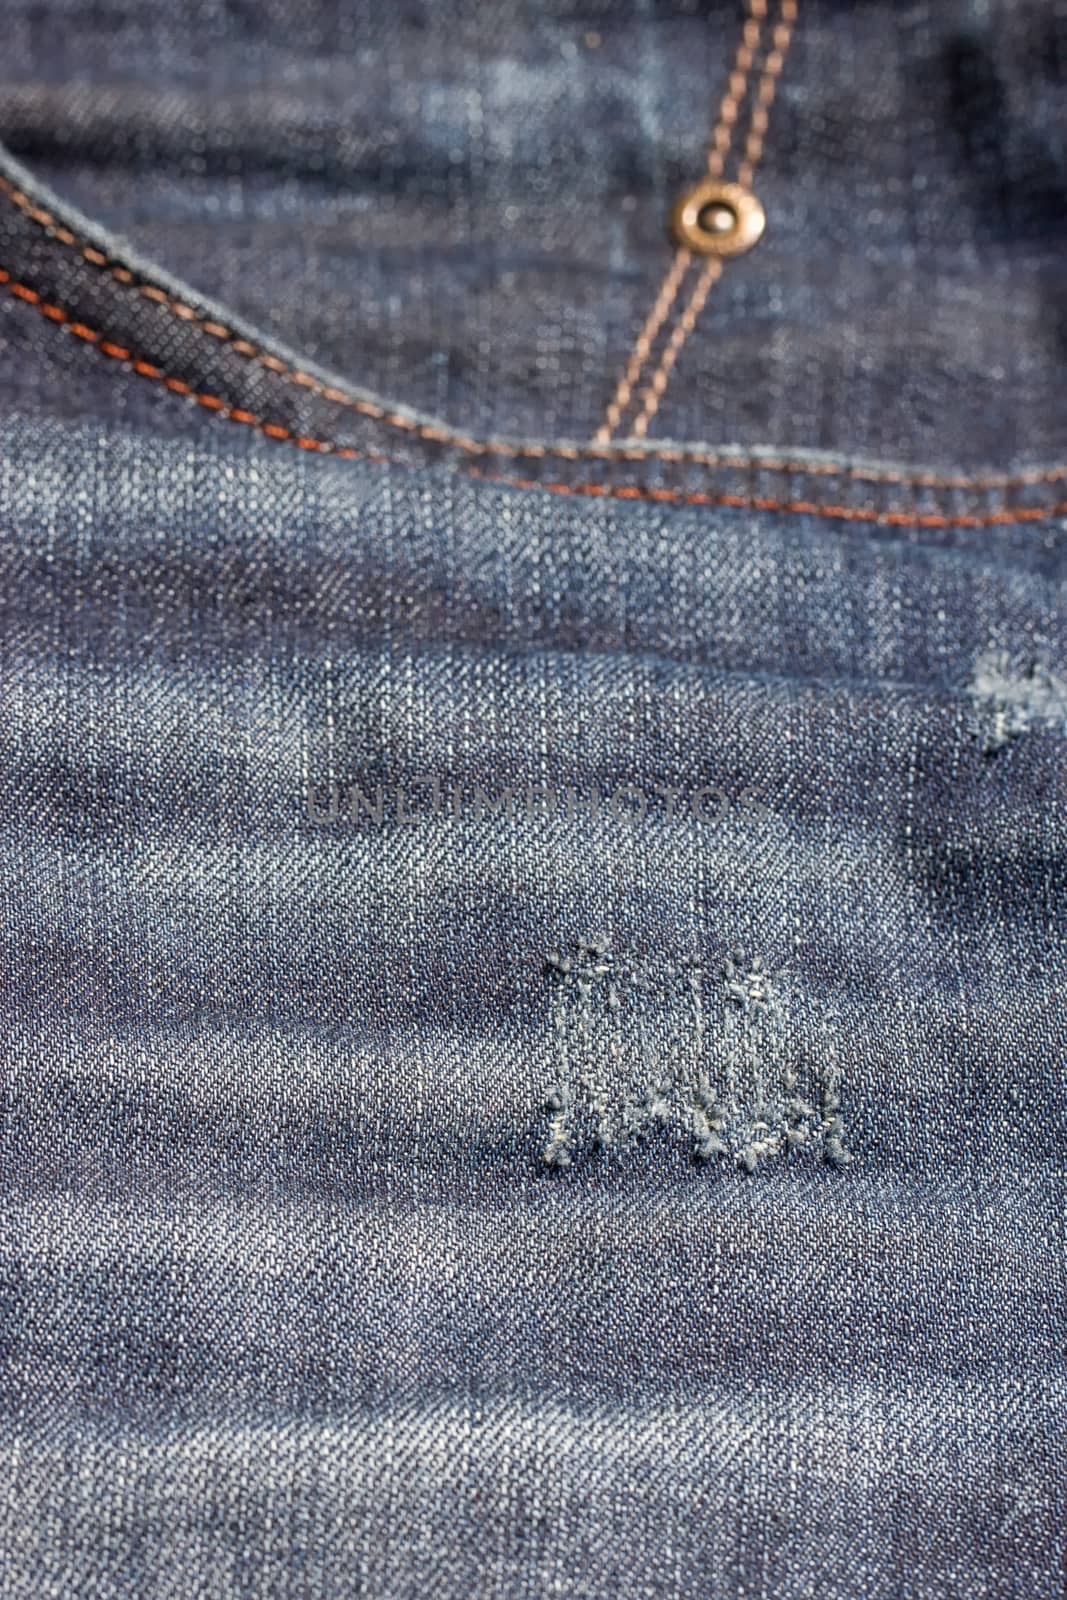 Blue jeans pocket with scuffs. Denim texture